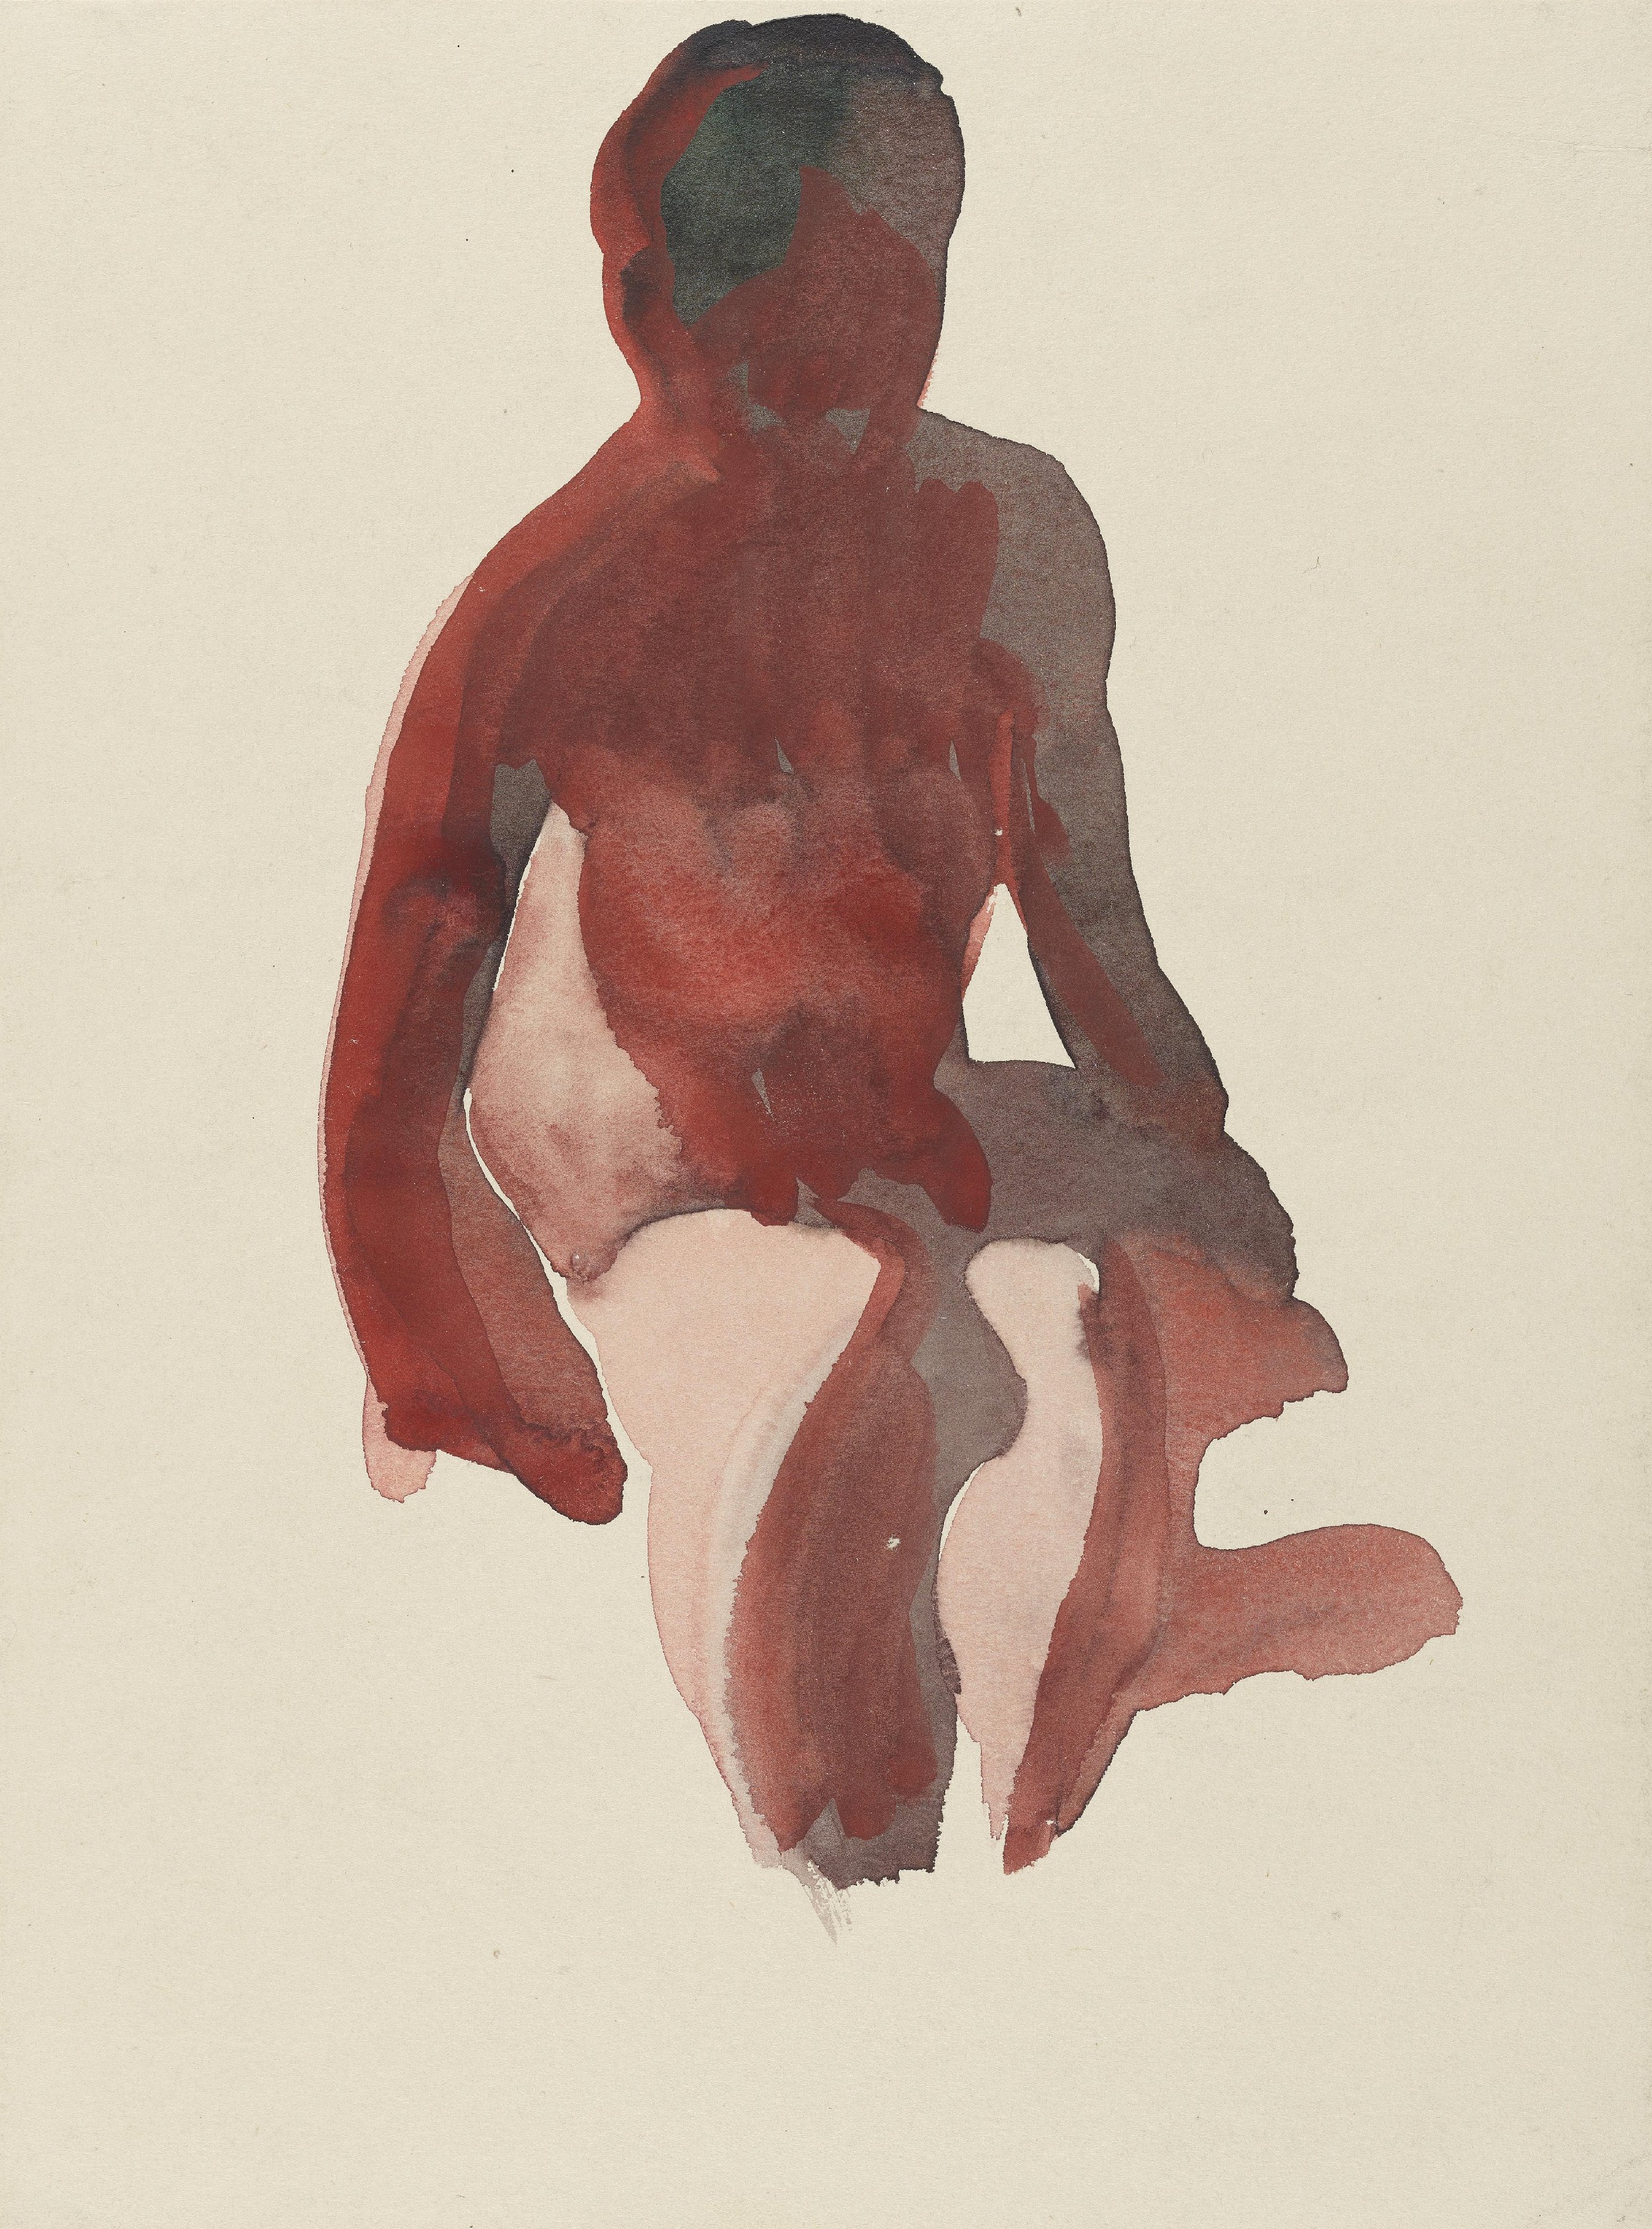 Georgia O'Keeffe. Nude Series V. 1918. Source: Philadelphia Museum of Art